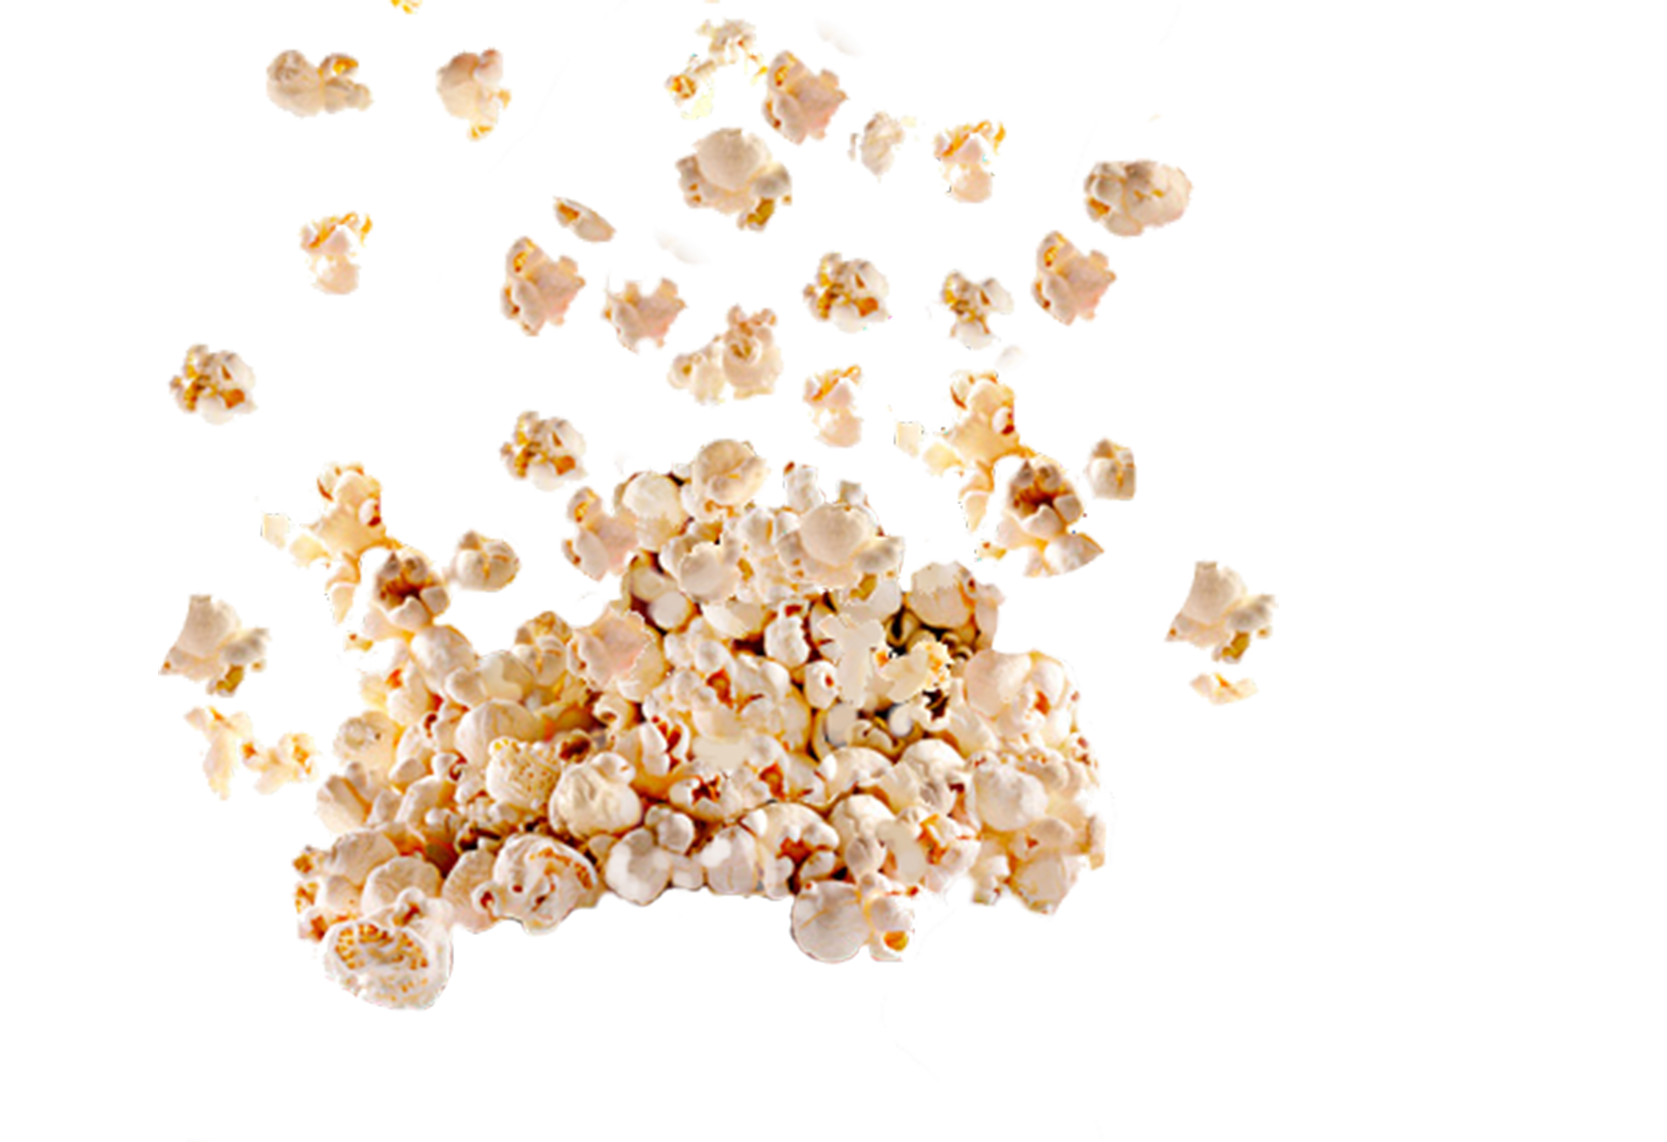 Popcorn PNG Image